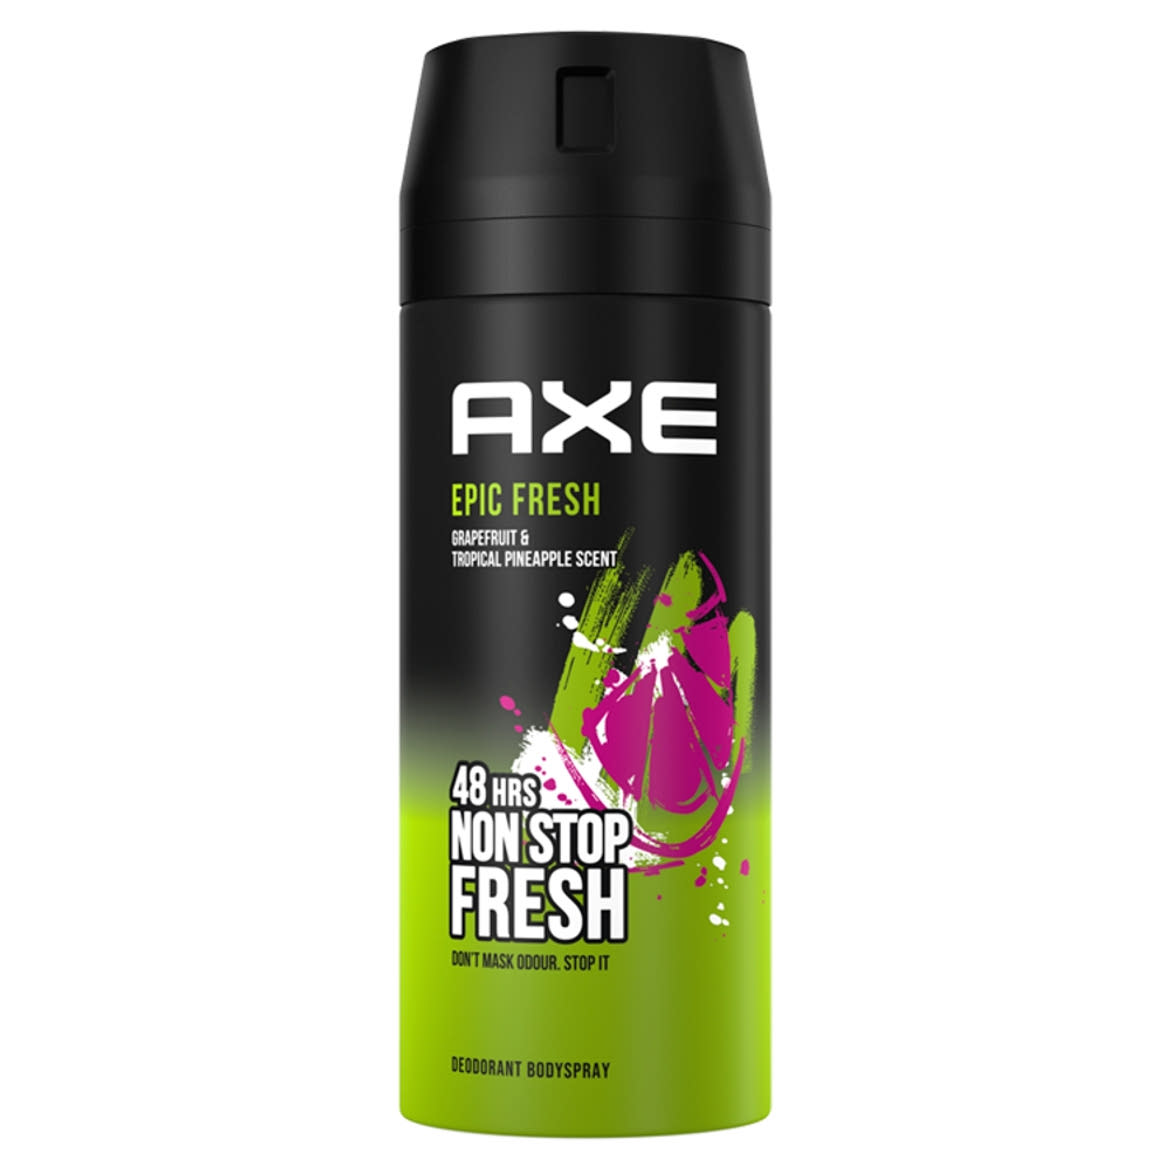 AXE Epic Fresh aerosol